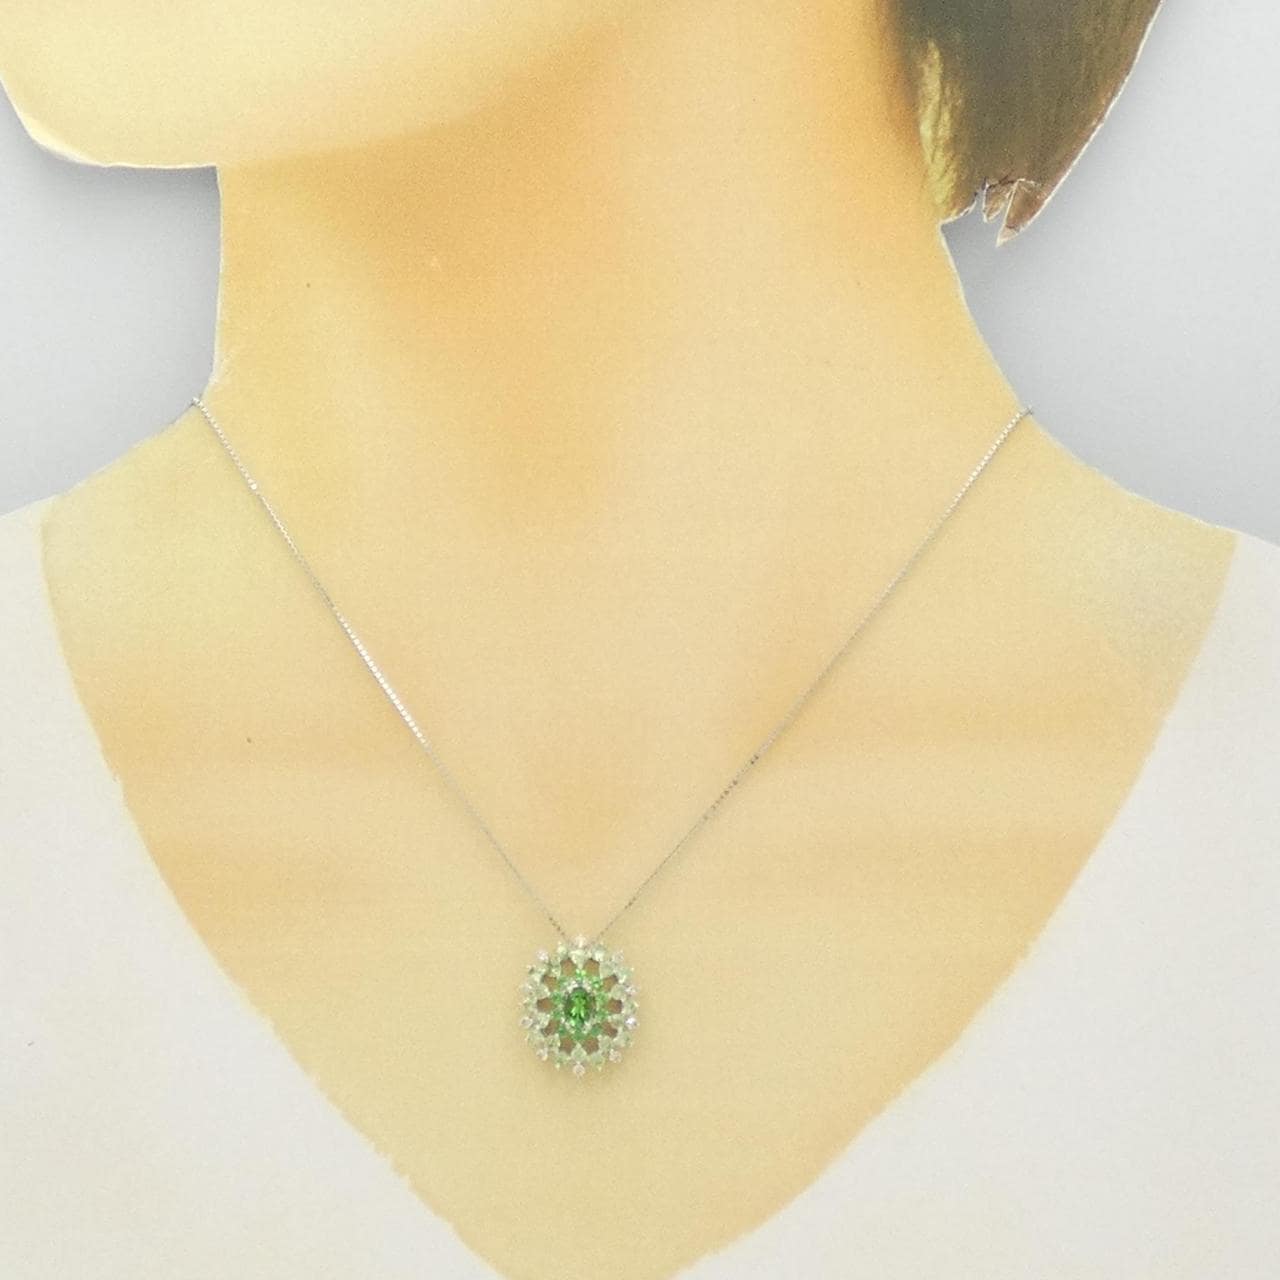 K18WG Garnet necklace 1.57CT